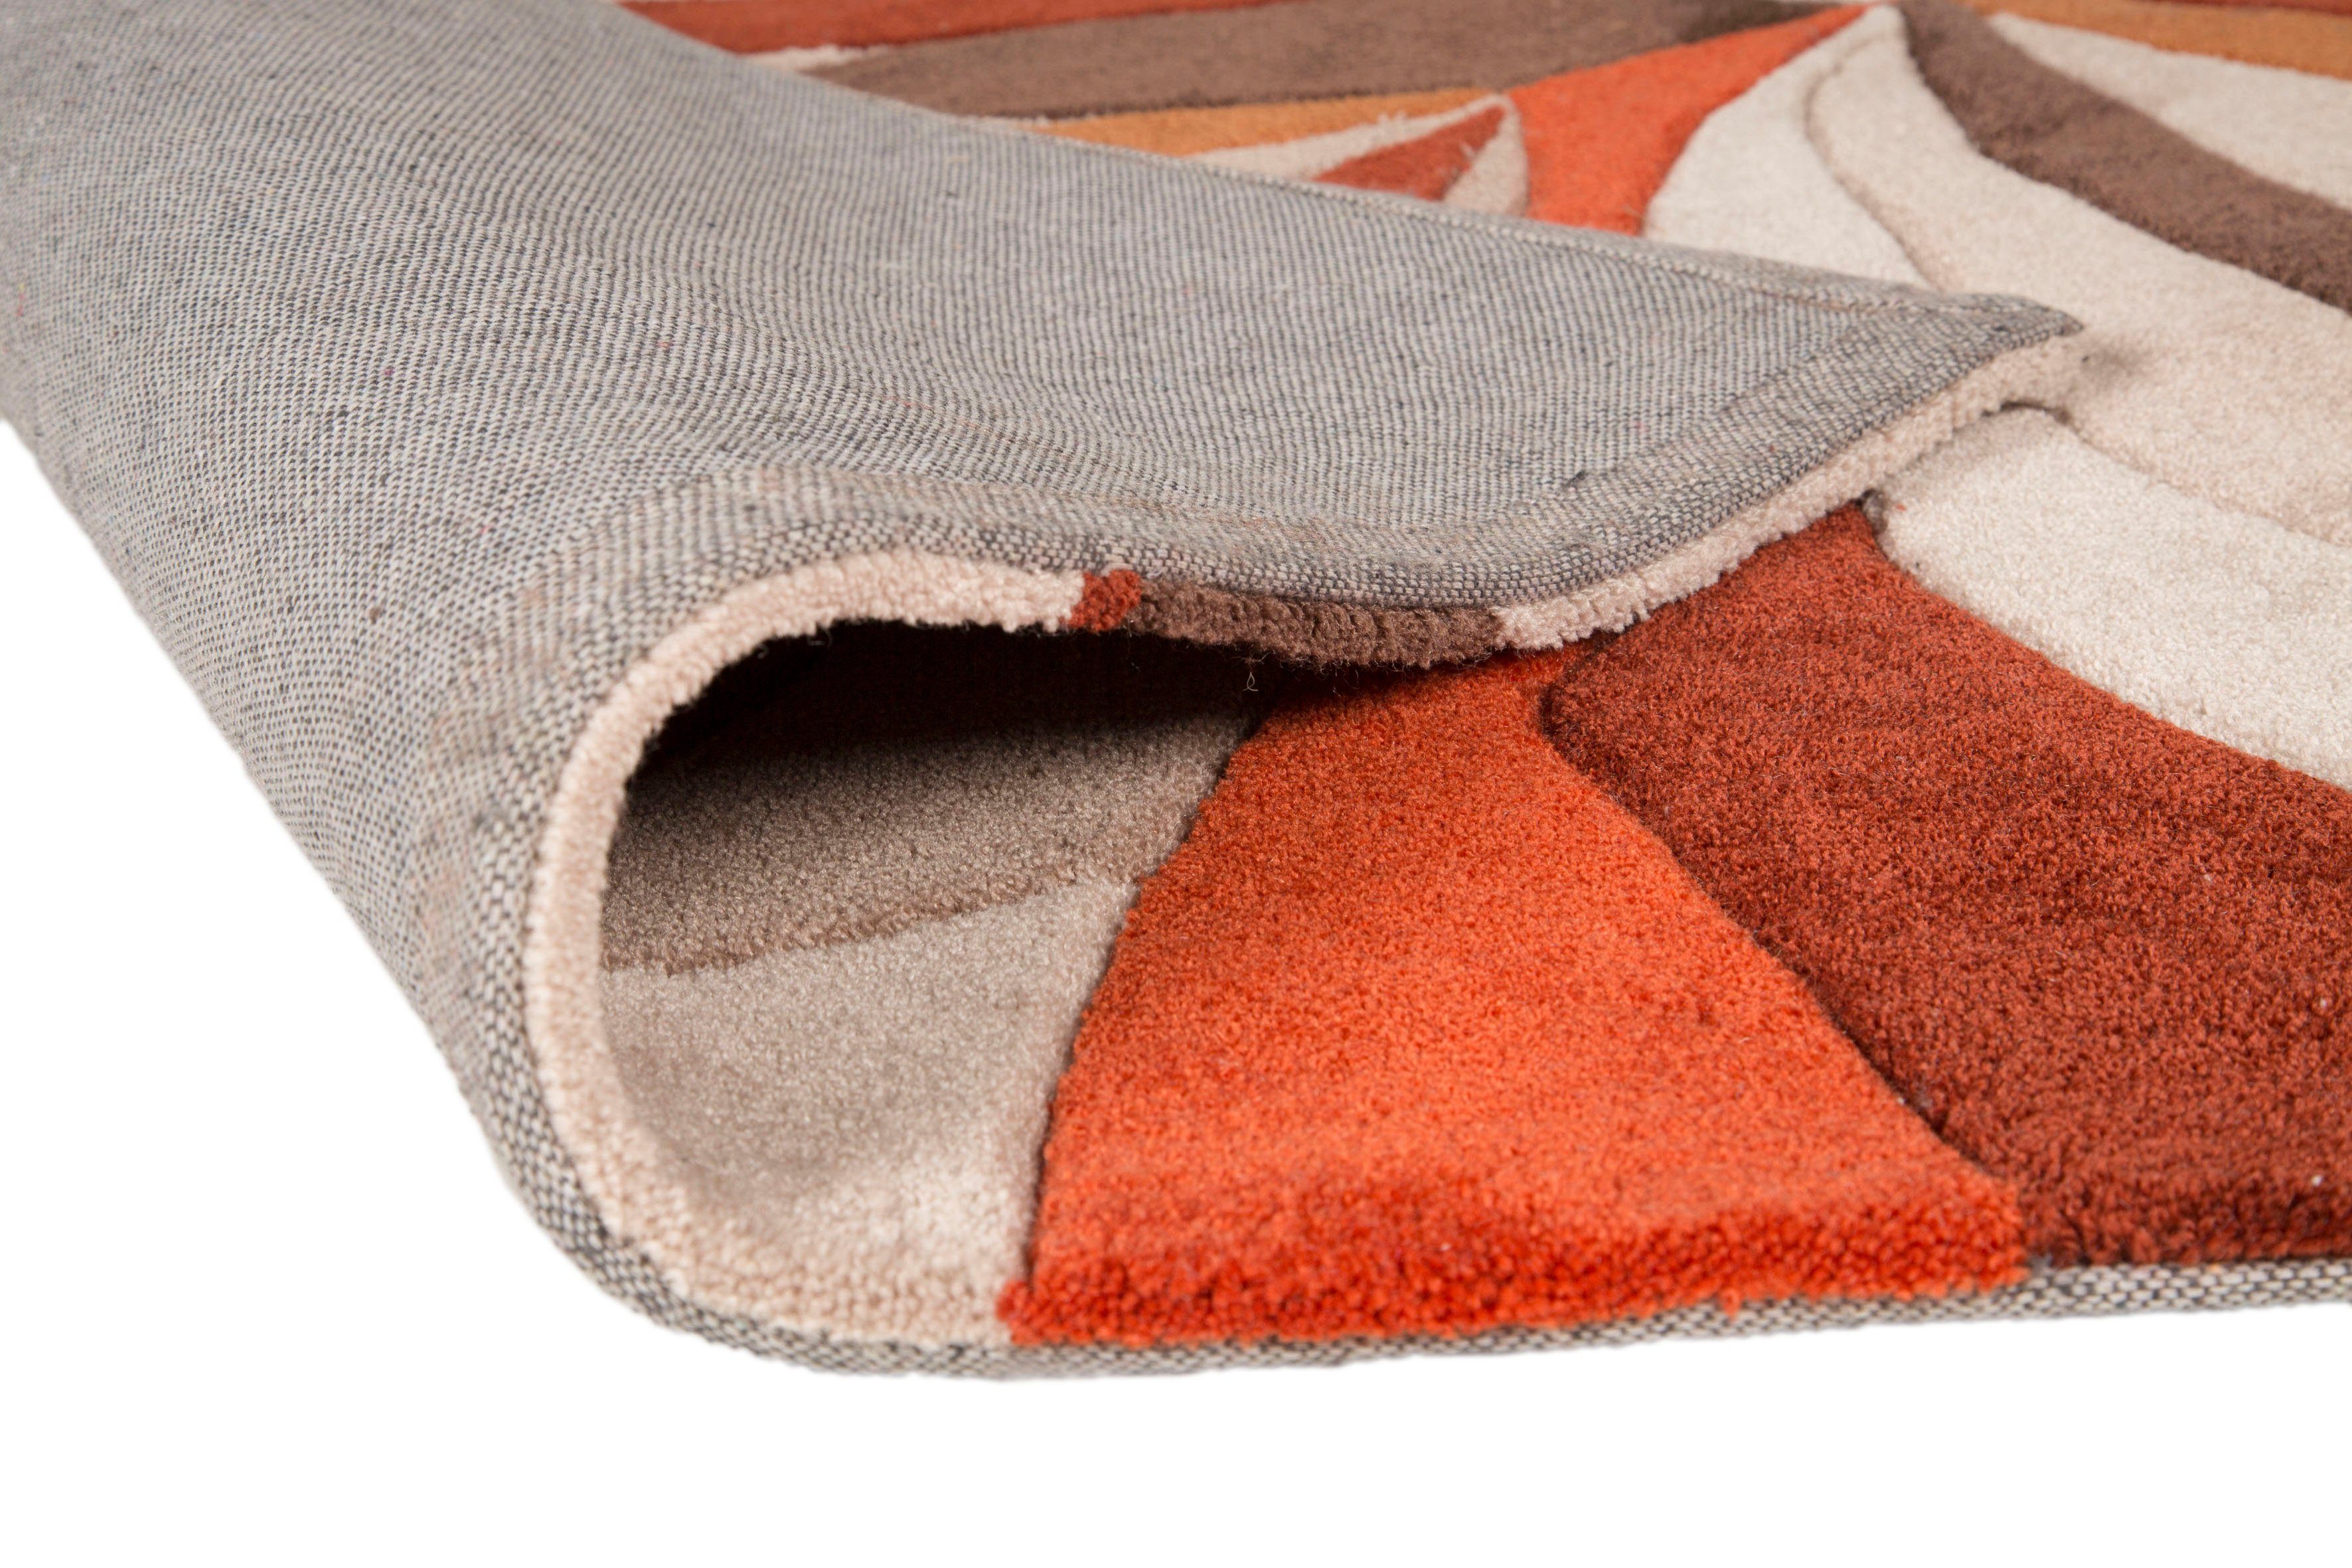 Teppich Splinter, FLAIR RUGS, mehrfarbig orange 10 gemustert fußbodenheizungsgeeignet, mm, rechteckig, Höhe